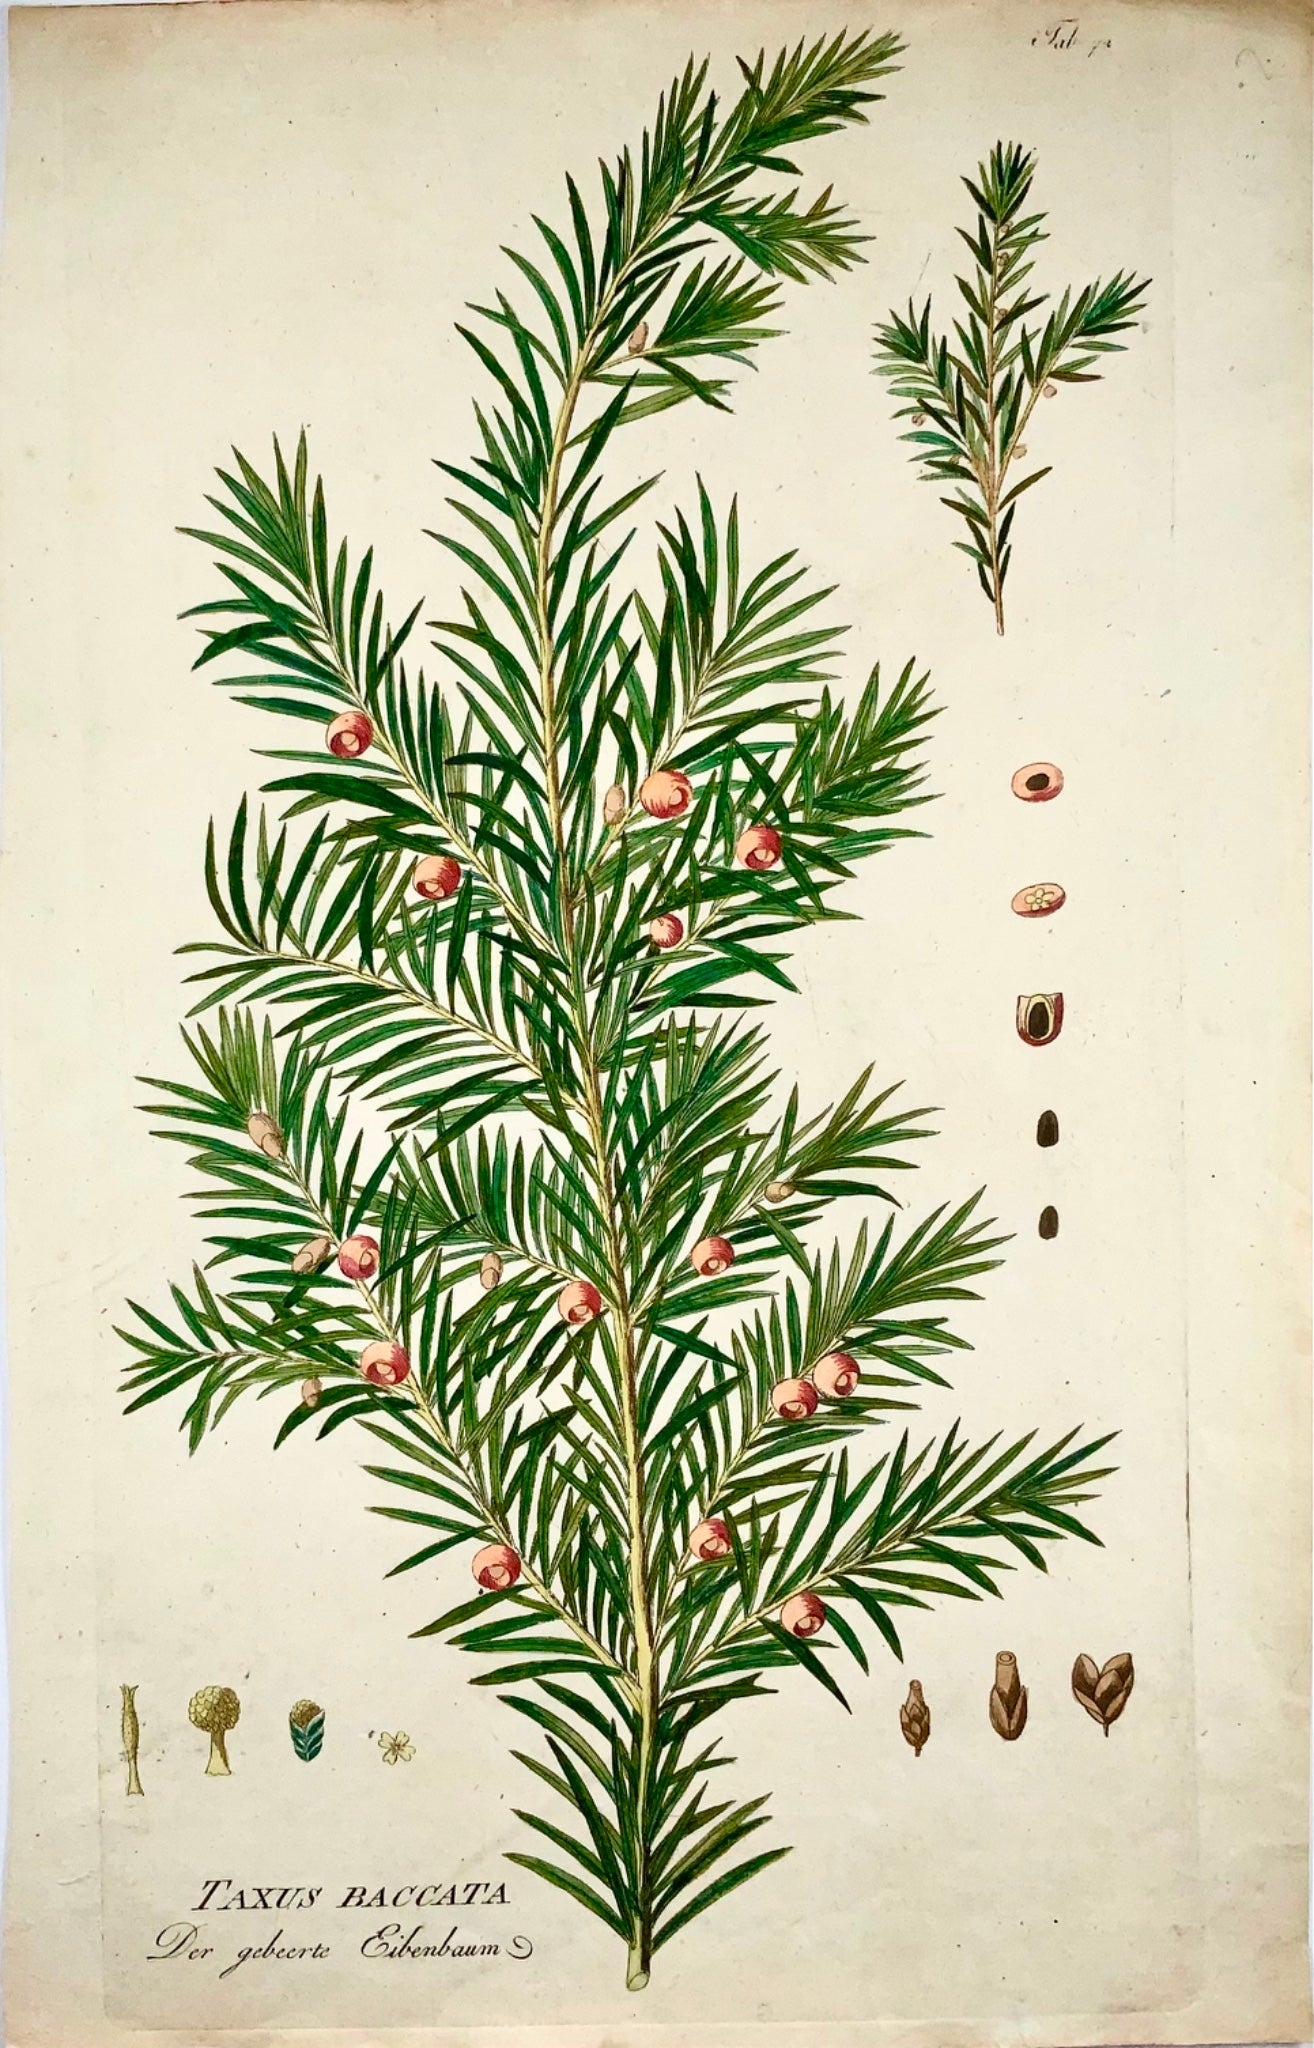 1788 Yew Tree, dendrology, J. J. Plenck, Icones plantarum, 45cm, folio